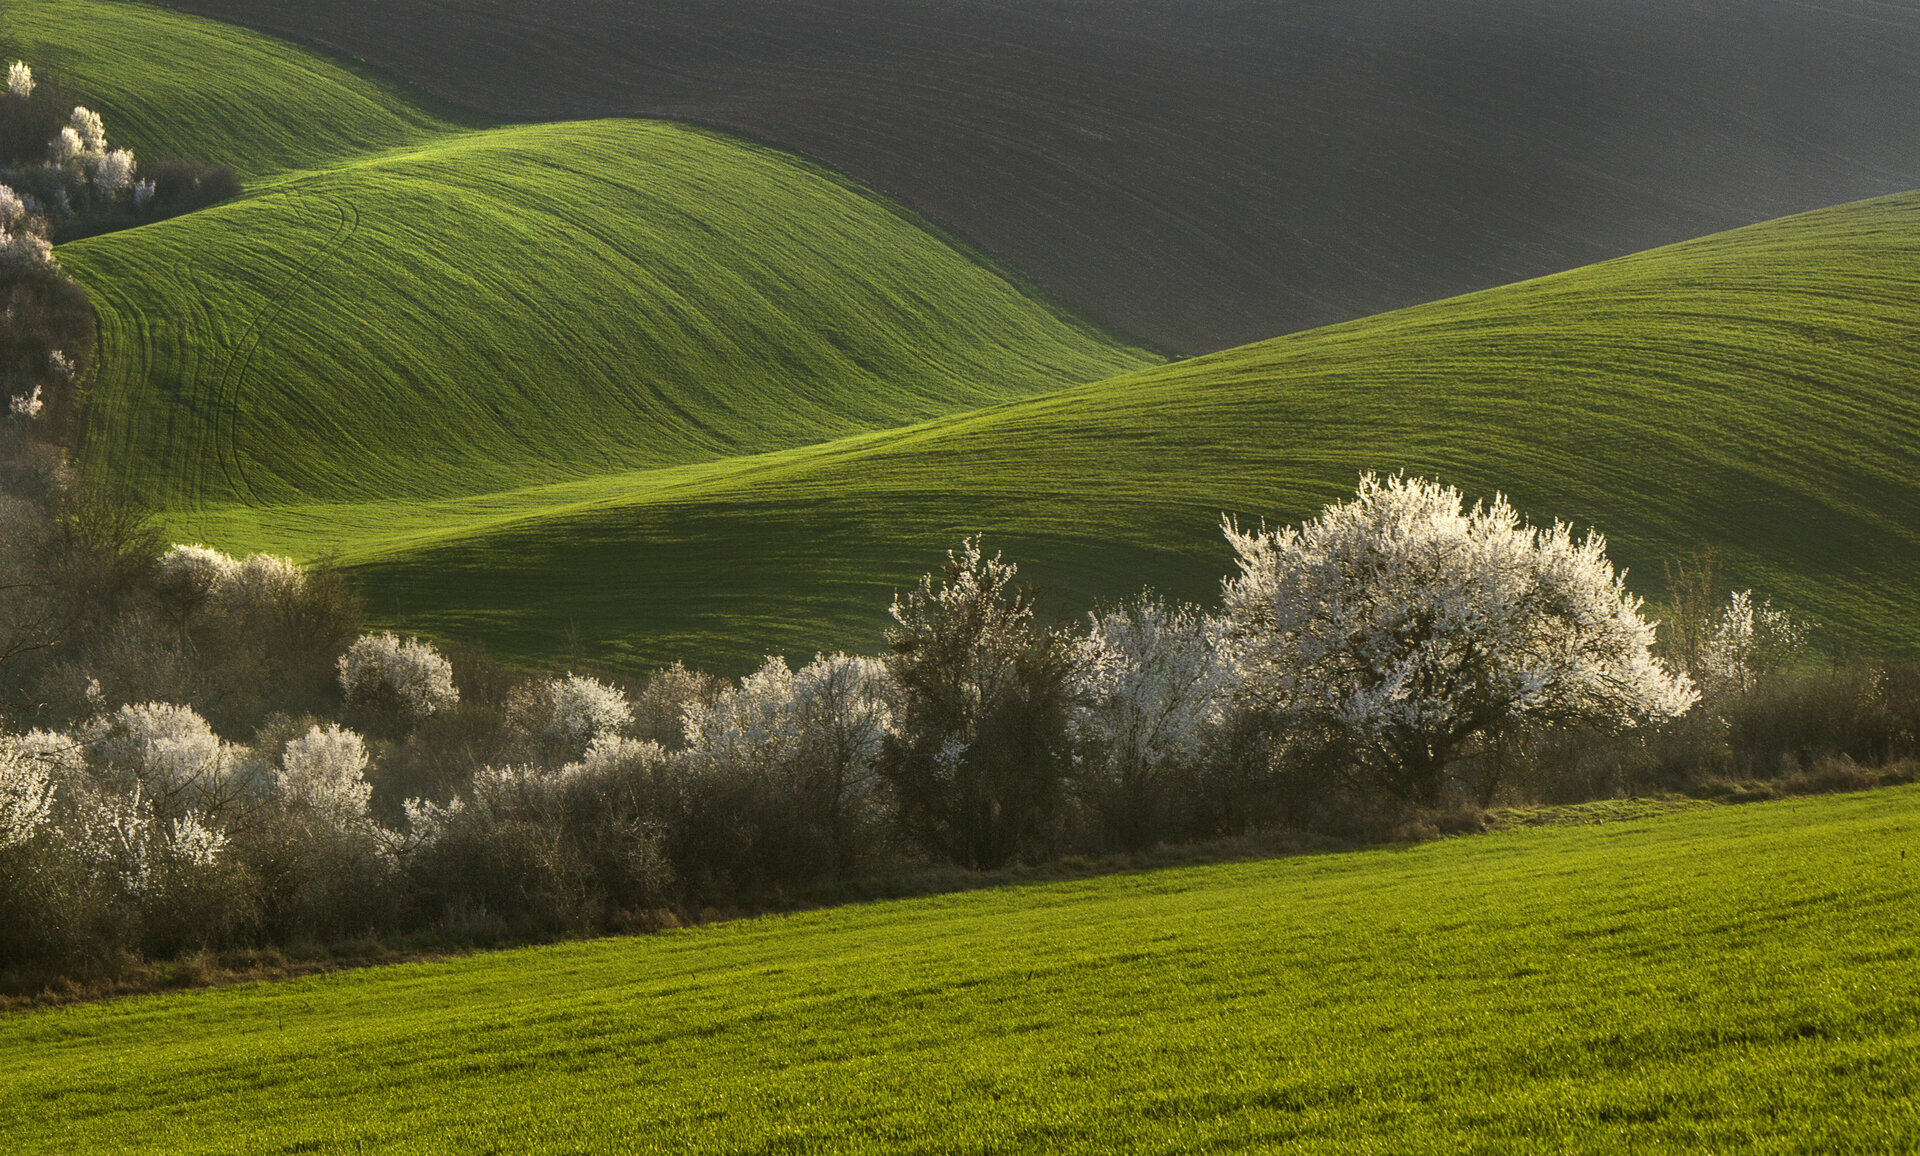 Photo in Landscape | Author tsvetina ivanova - cve | PHOTO FORUM